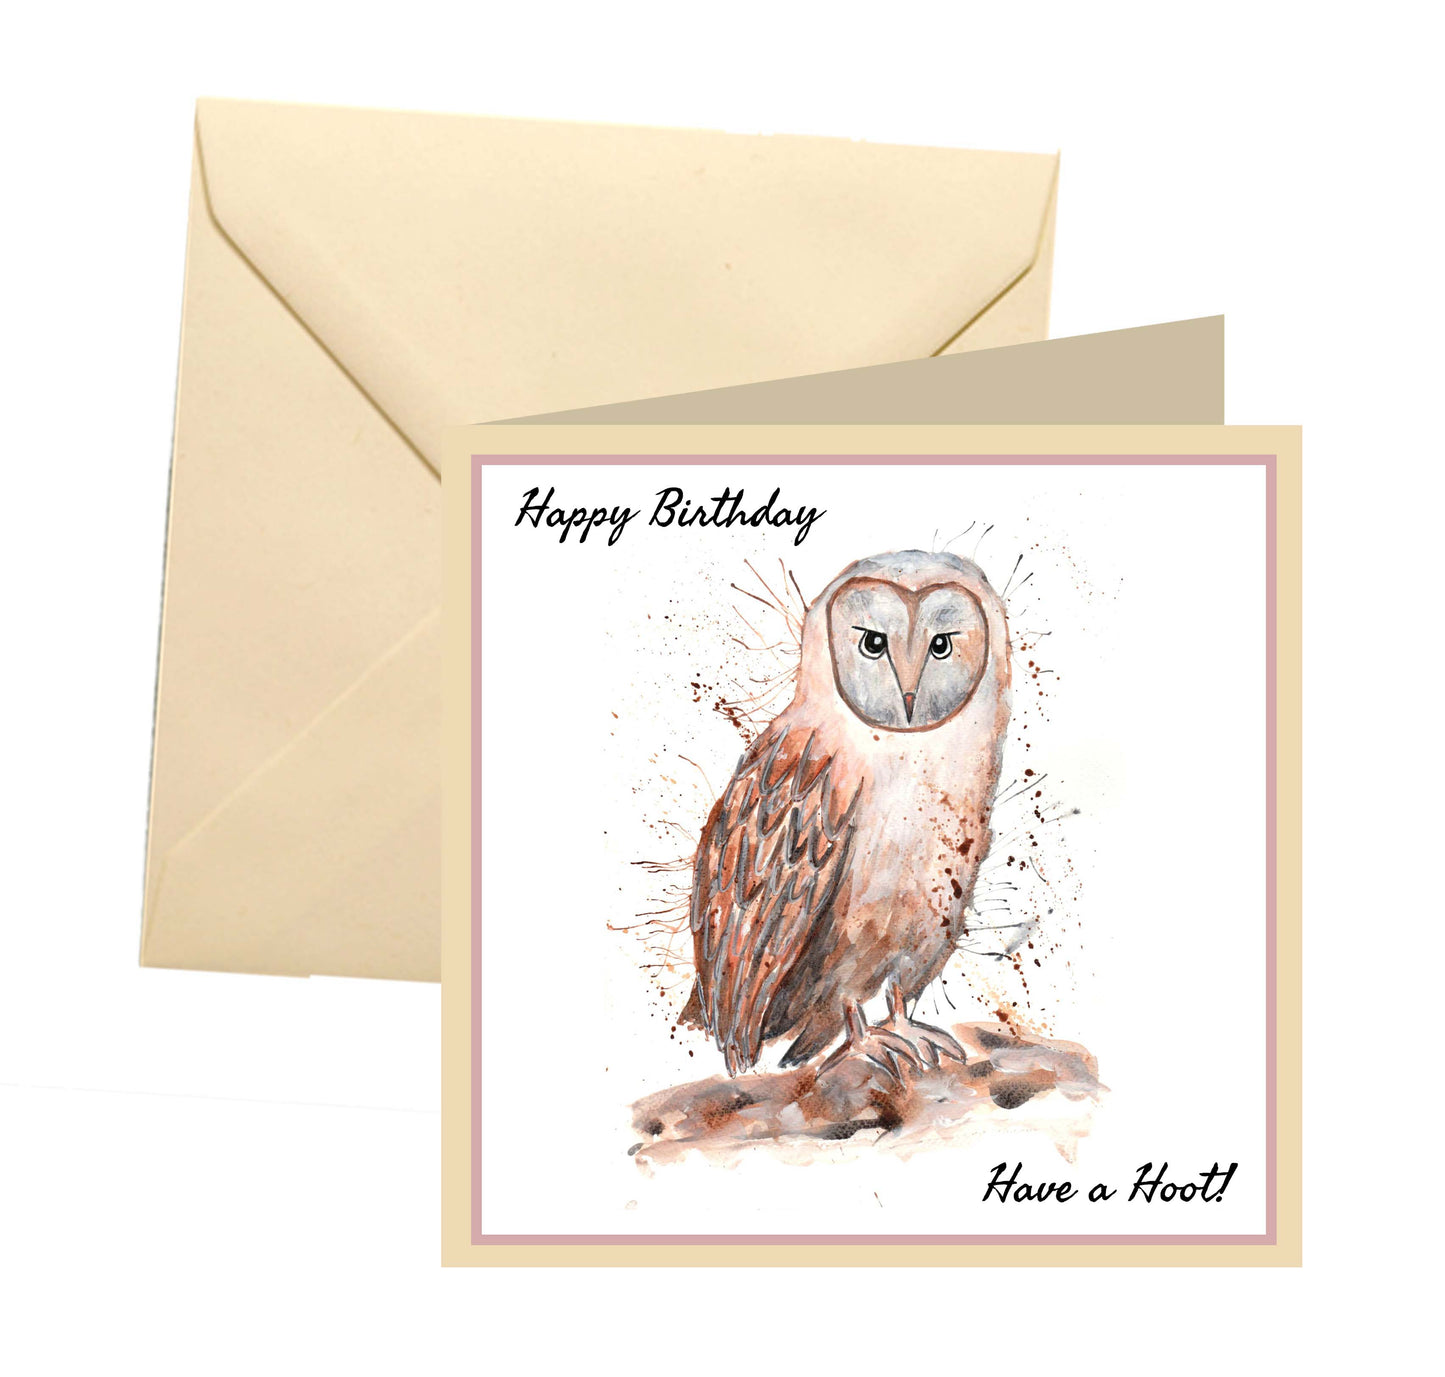 Owl birthday card - Have a hoot